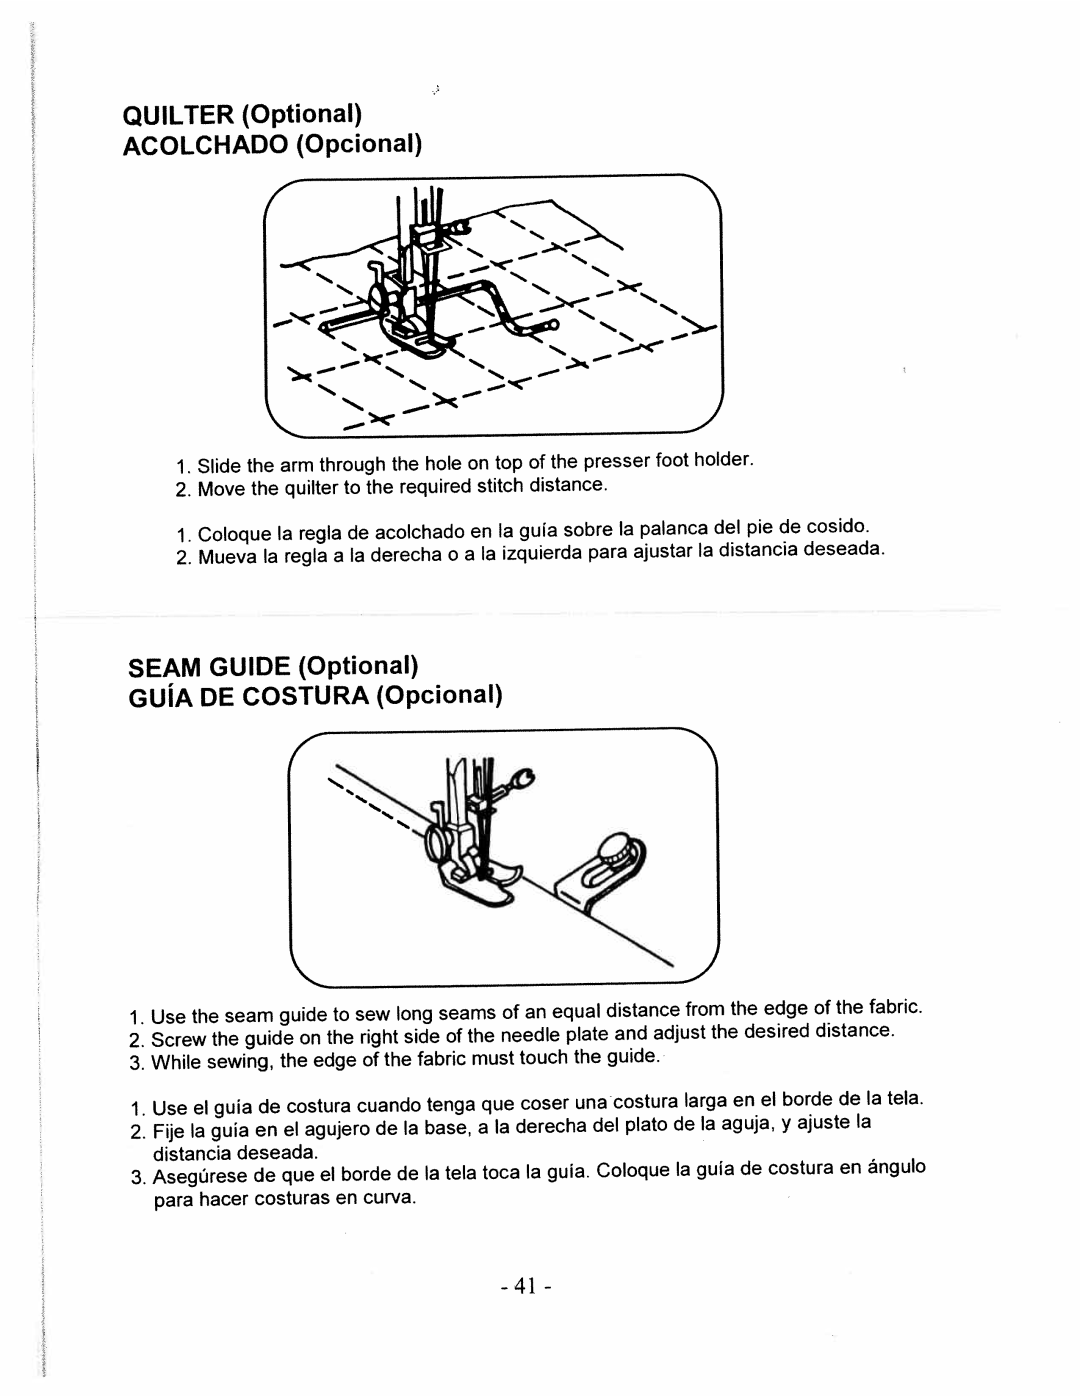 White W480 manual Quilter, Acolchado, Guide, Seam, Guia 